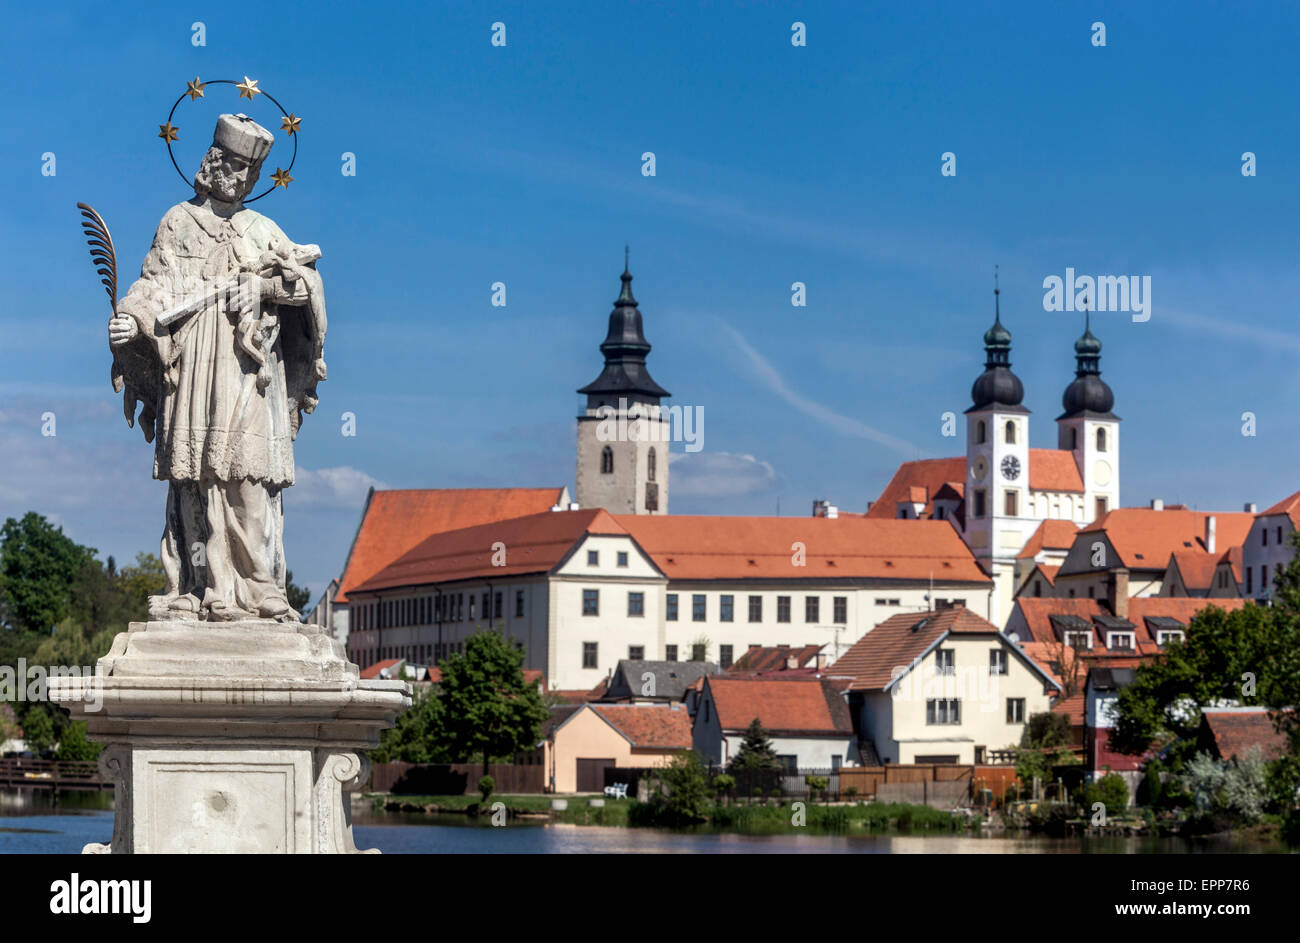 Telc Czech Republic, World heritage town, statue of St John of Nepomuk Stock Photo